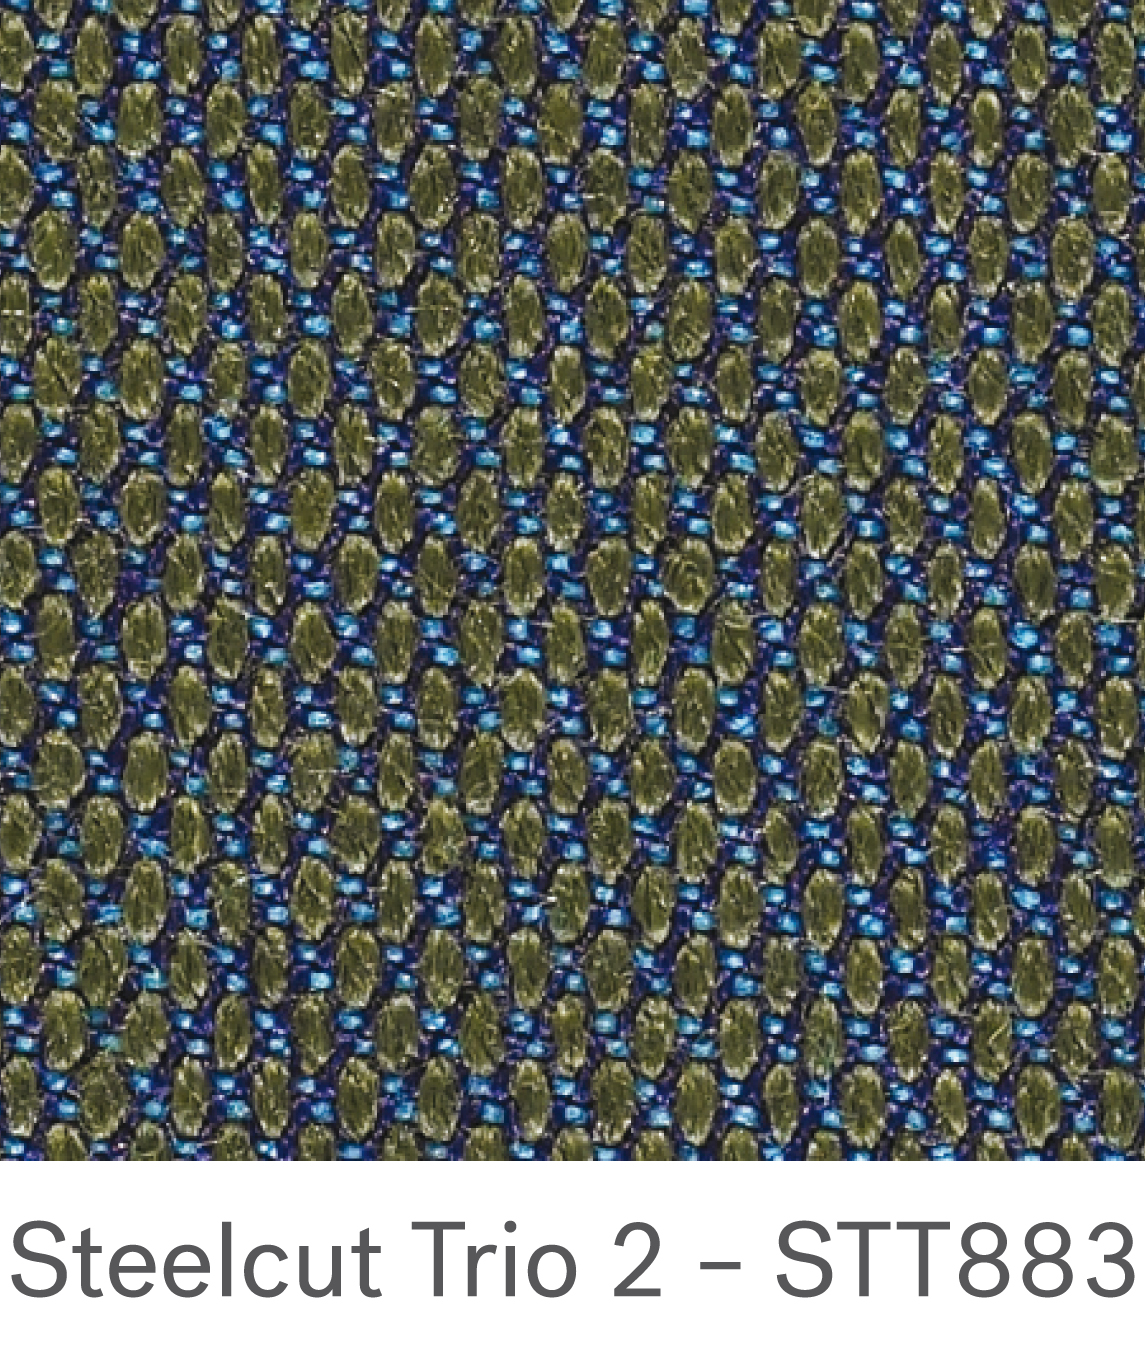 Steelcut Trio (Kvadrat) – STT883